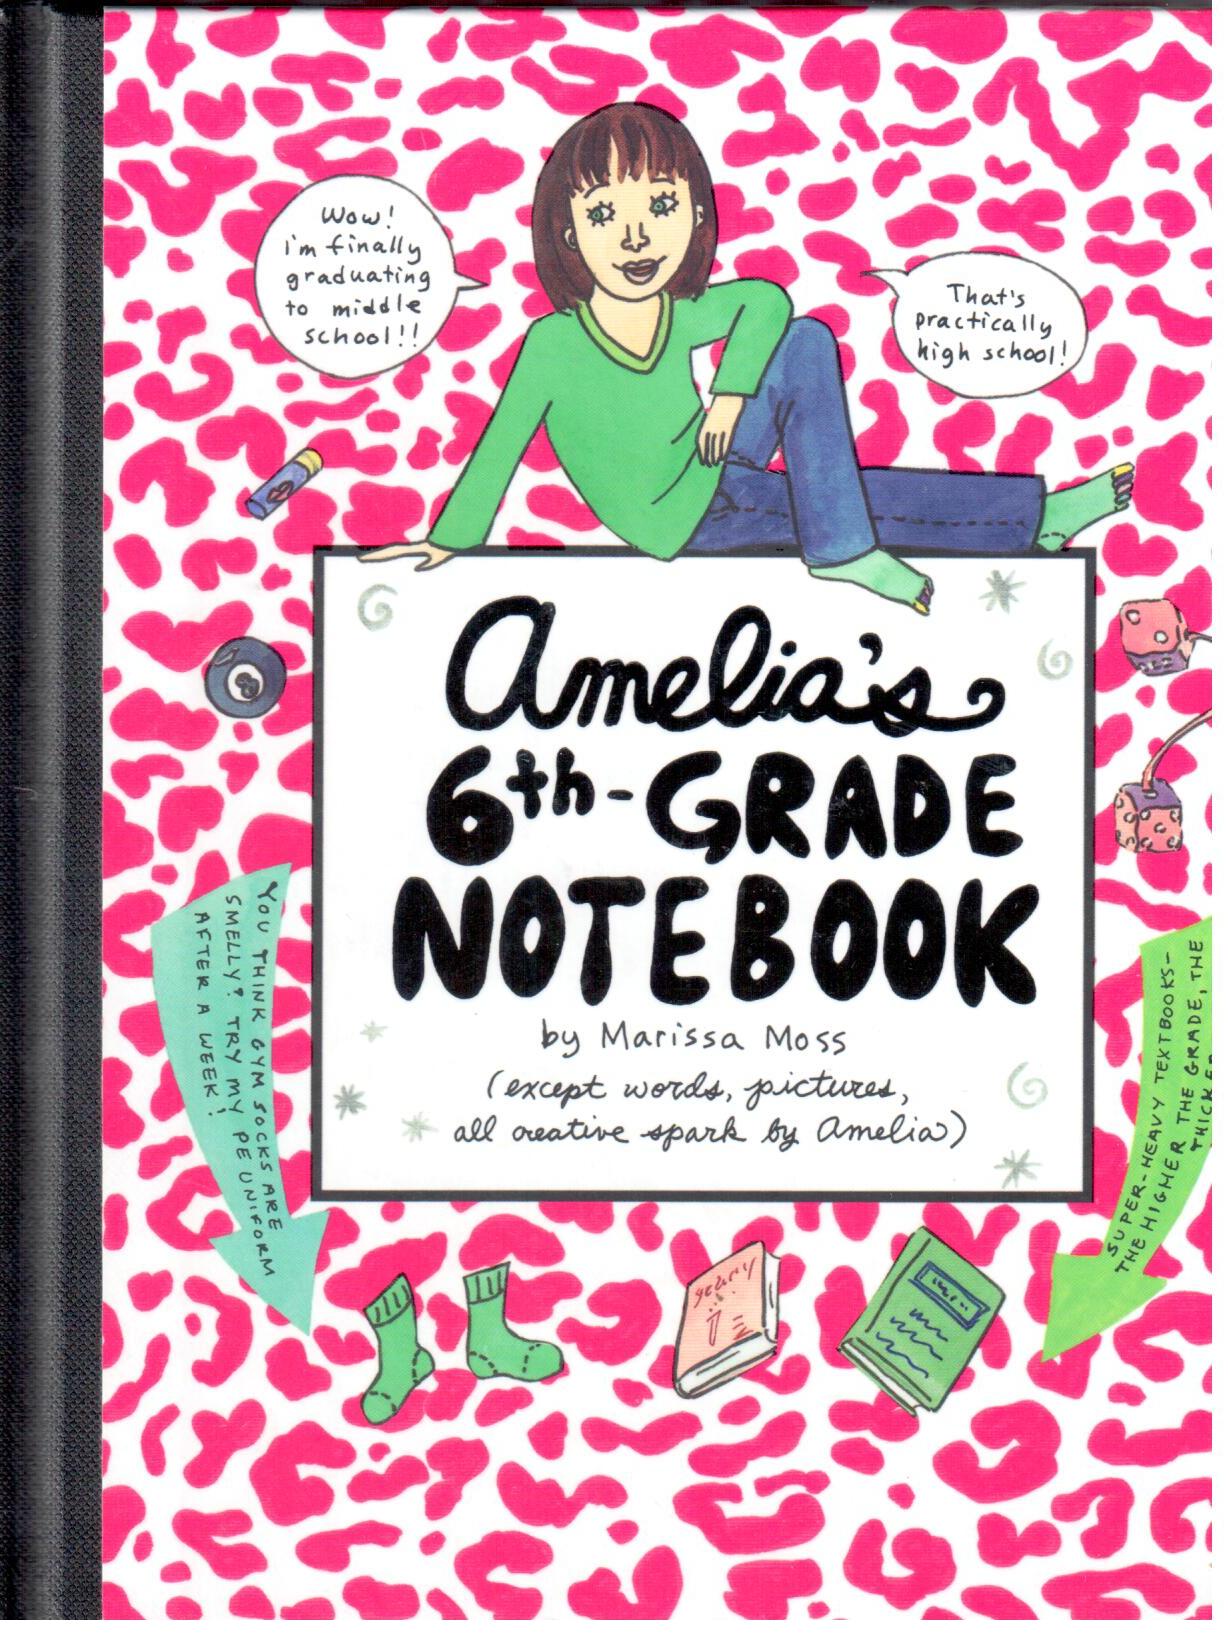 Amelia's 6th-grade notebook